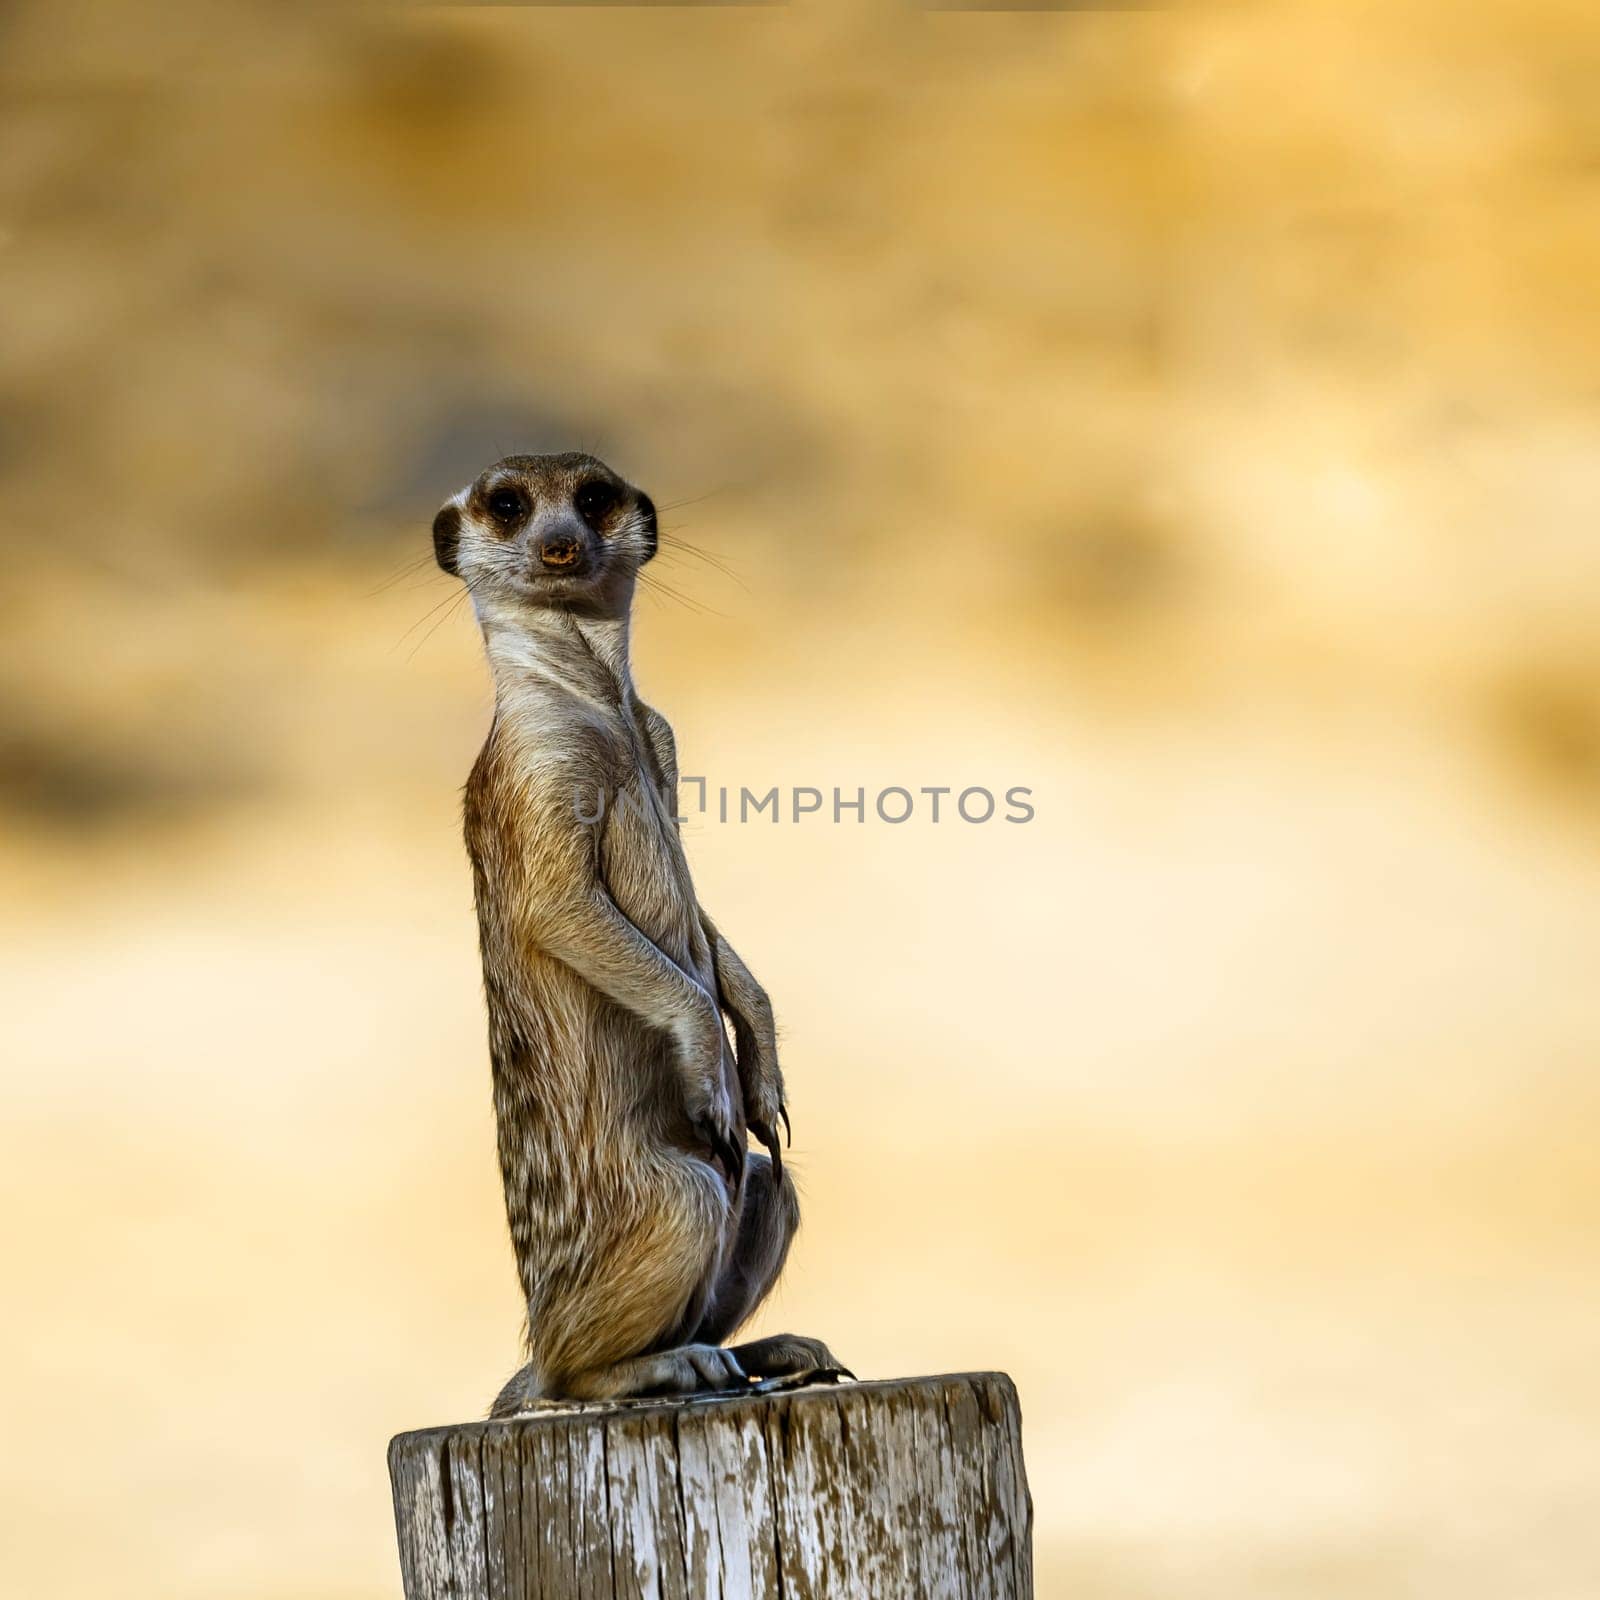 Meerkat in alert standing on a wood pole in Kgalagadi transfrontier park, South Africa; specie Suricata suricatta family of Herpestidae